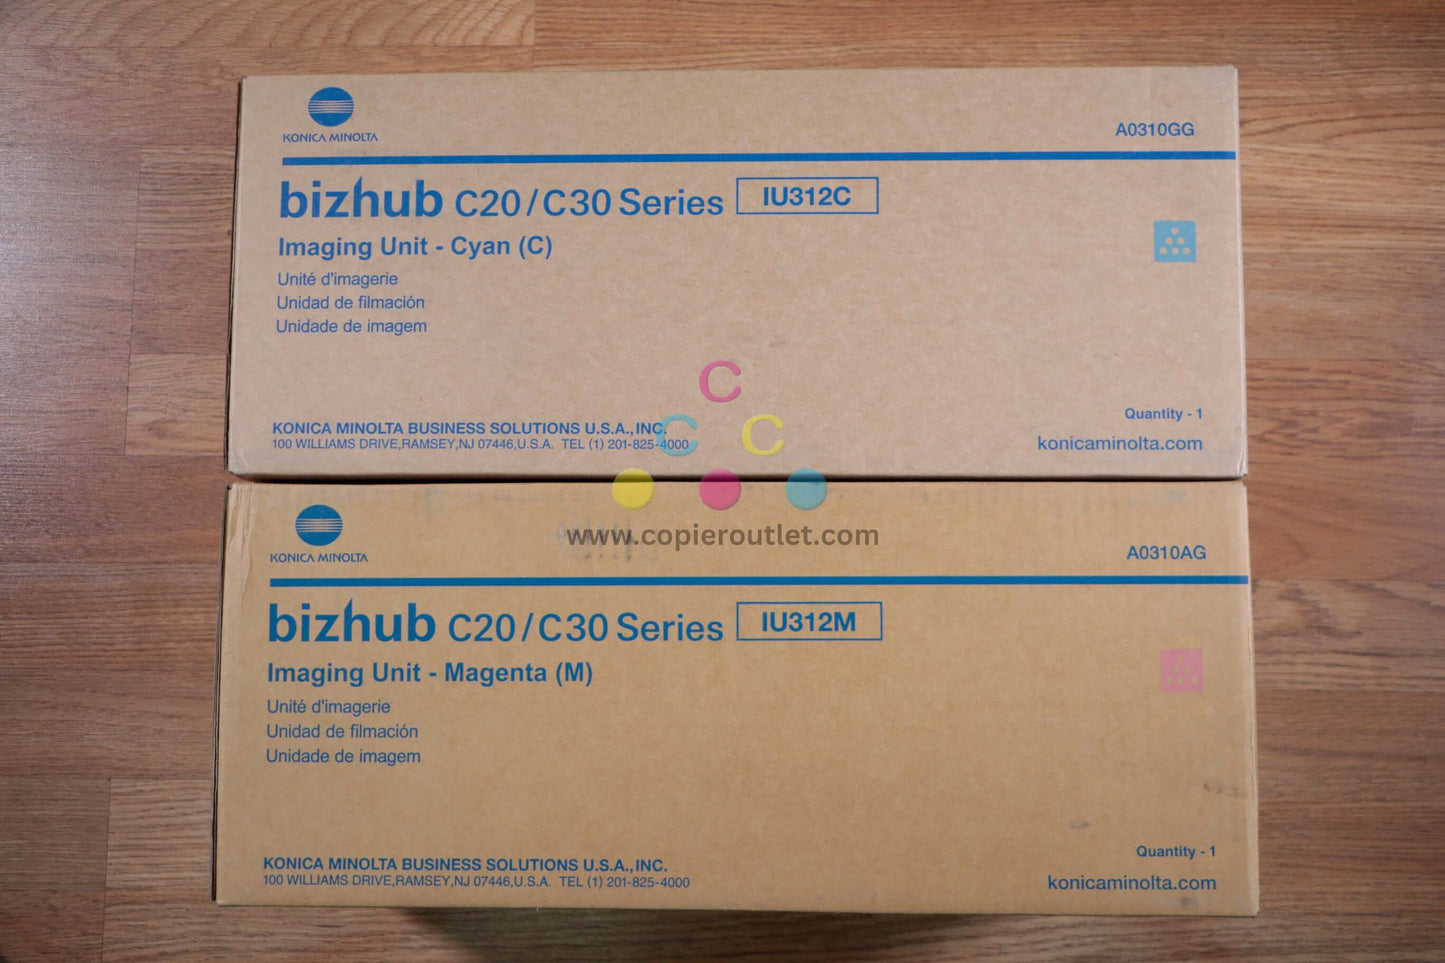 Lot of 2 Konica Minolta IU312 CM Imaging Unit Cartridges bizhub C20/ C30 Series - copier-clearance-center